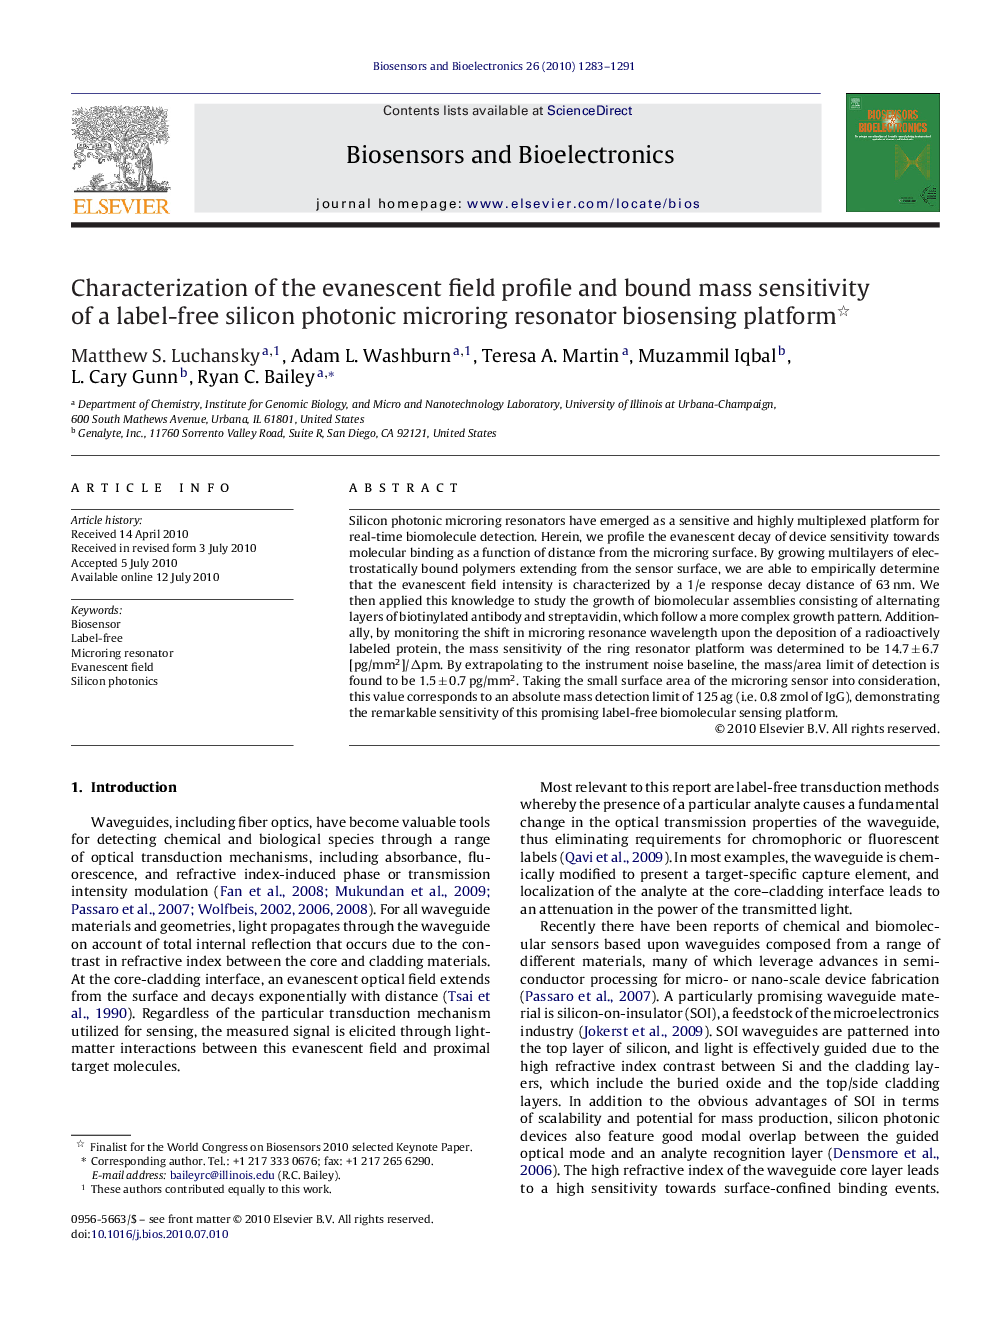 Characterization of the evanescent field profile and bound mass sensitivity of a label-free silicon photonic microring resonator biosensing platform 